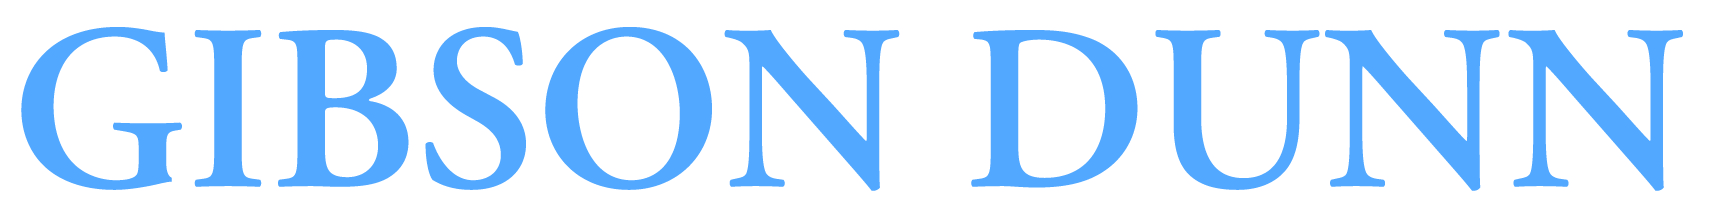 GDC Logo-blue-01.jpg